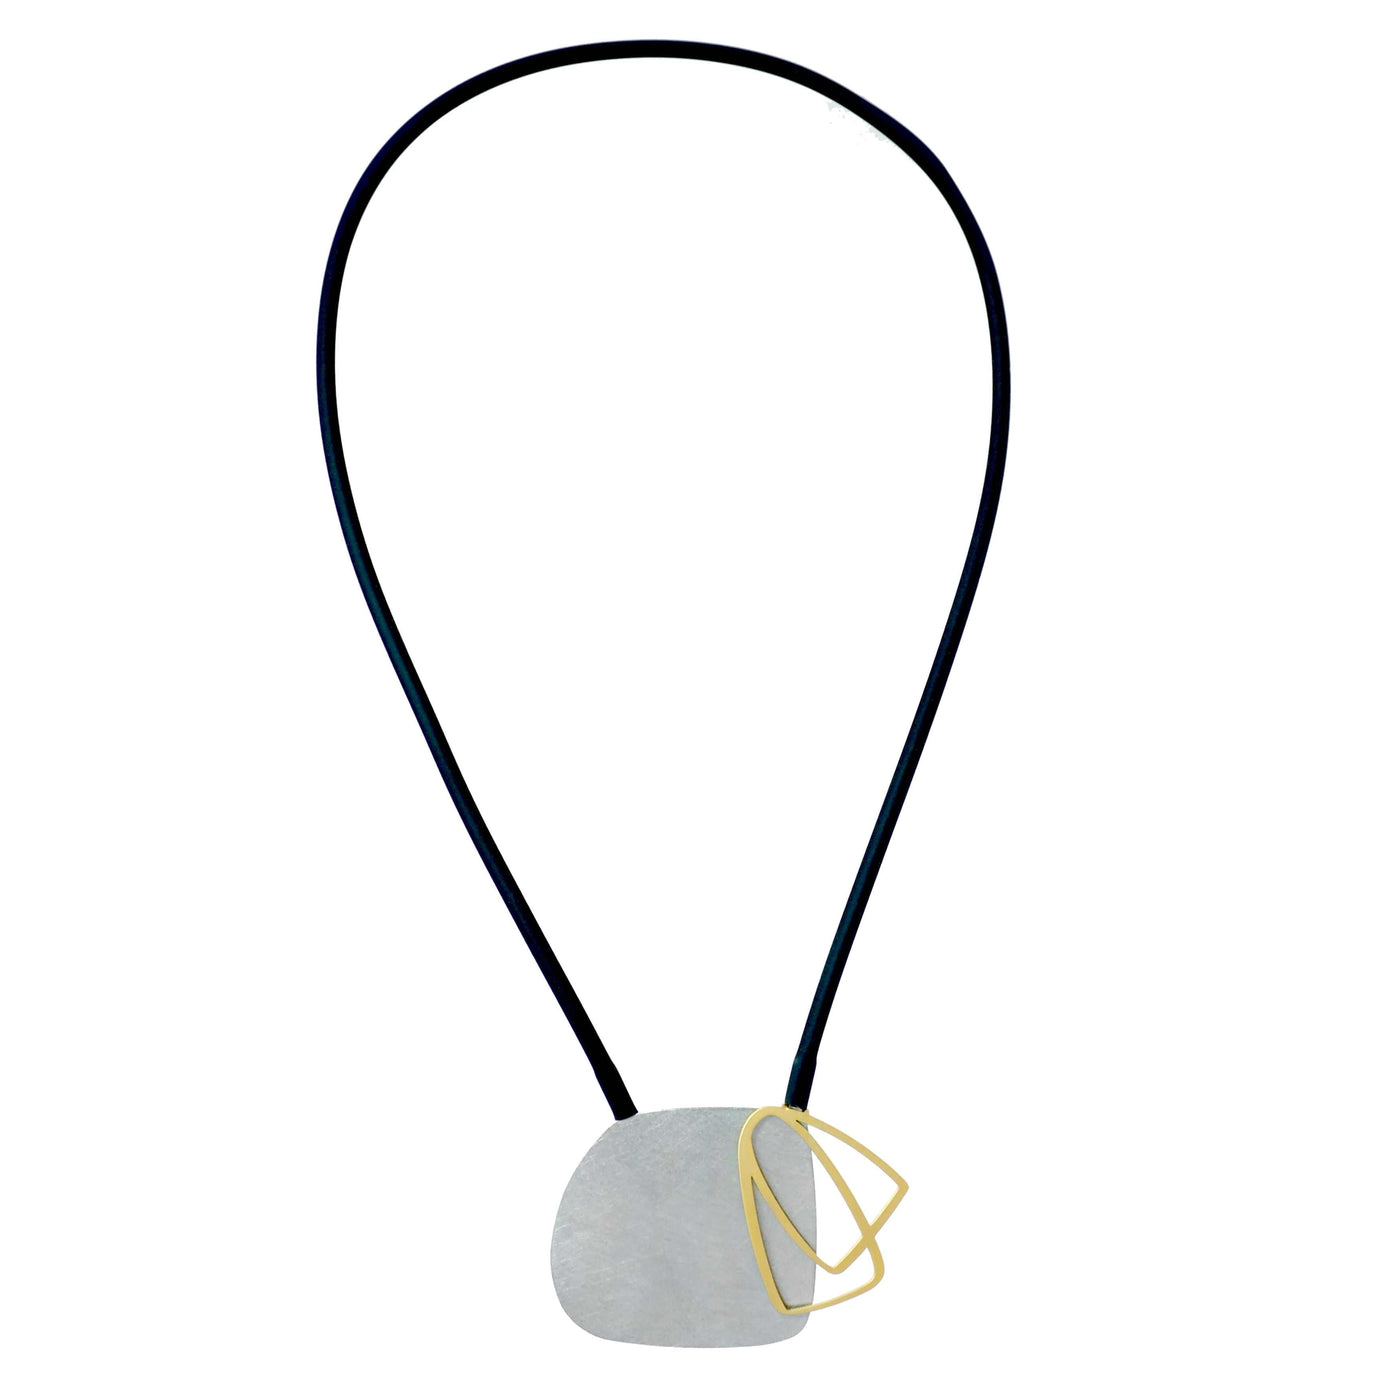 X2 Medium Necklace - Gold/ Black - inSync design